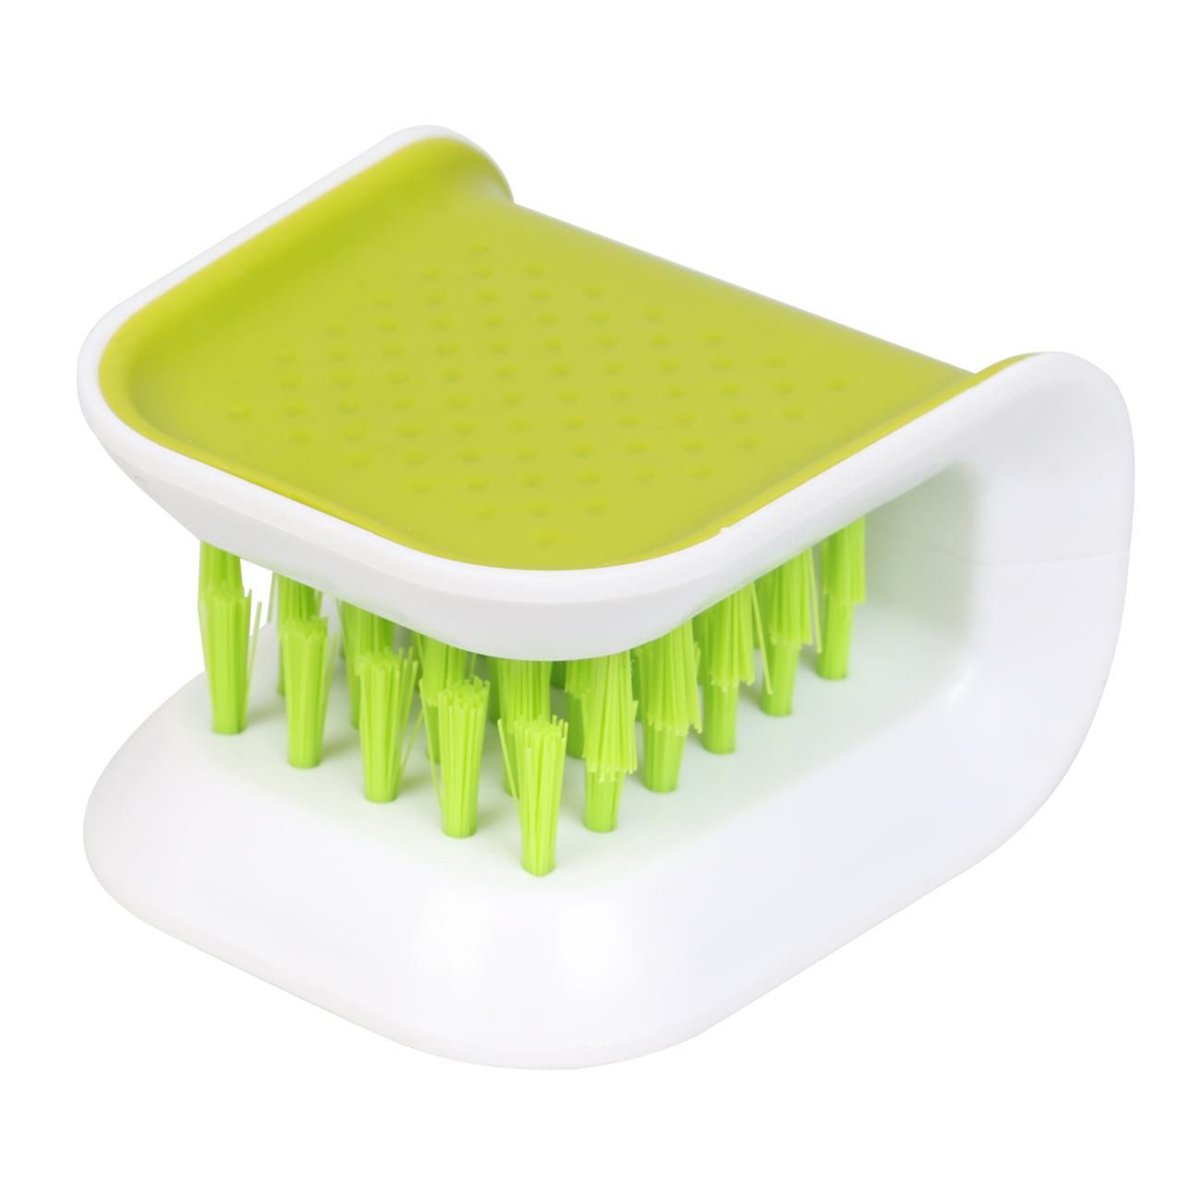 اشتري قم بشراء Homepro Cutlery Cleaning Brush 5544 1 pc Online at Best Price من الموقع - من لولو هايبر ماركت Brushes في الامارات